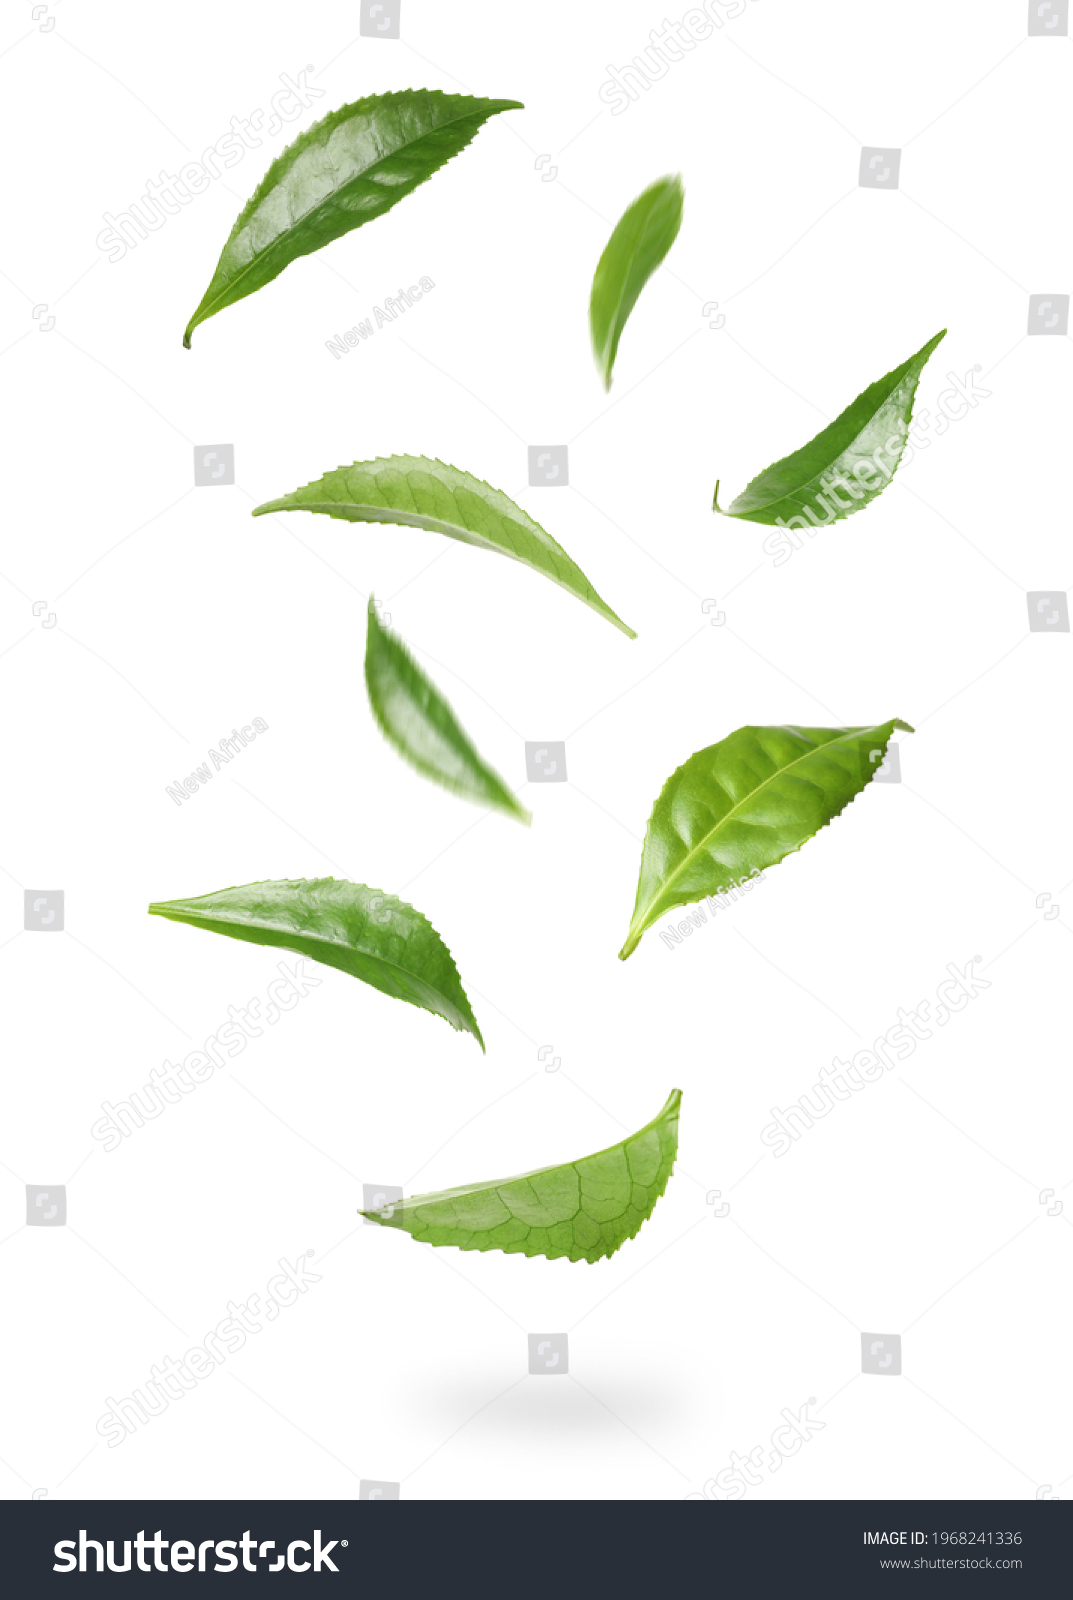 Fresh green tea leaves falling on white background #1968241336